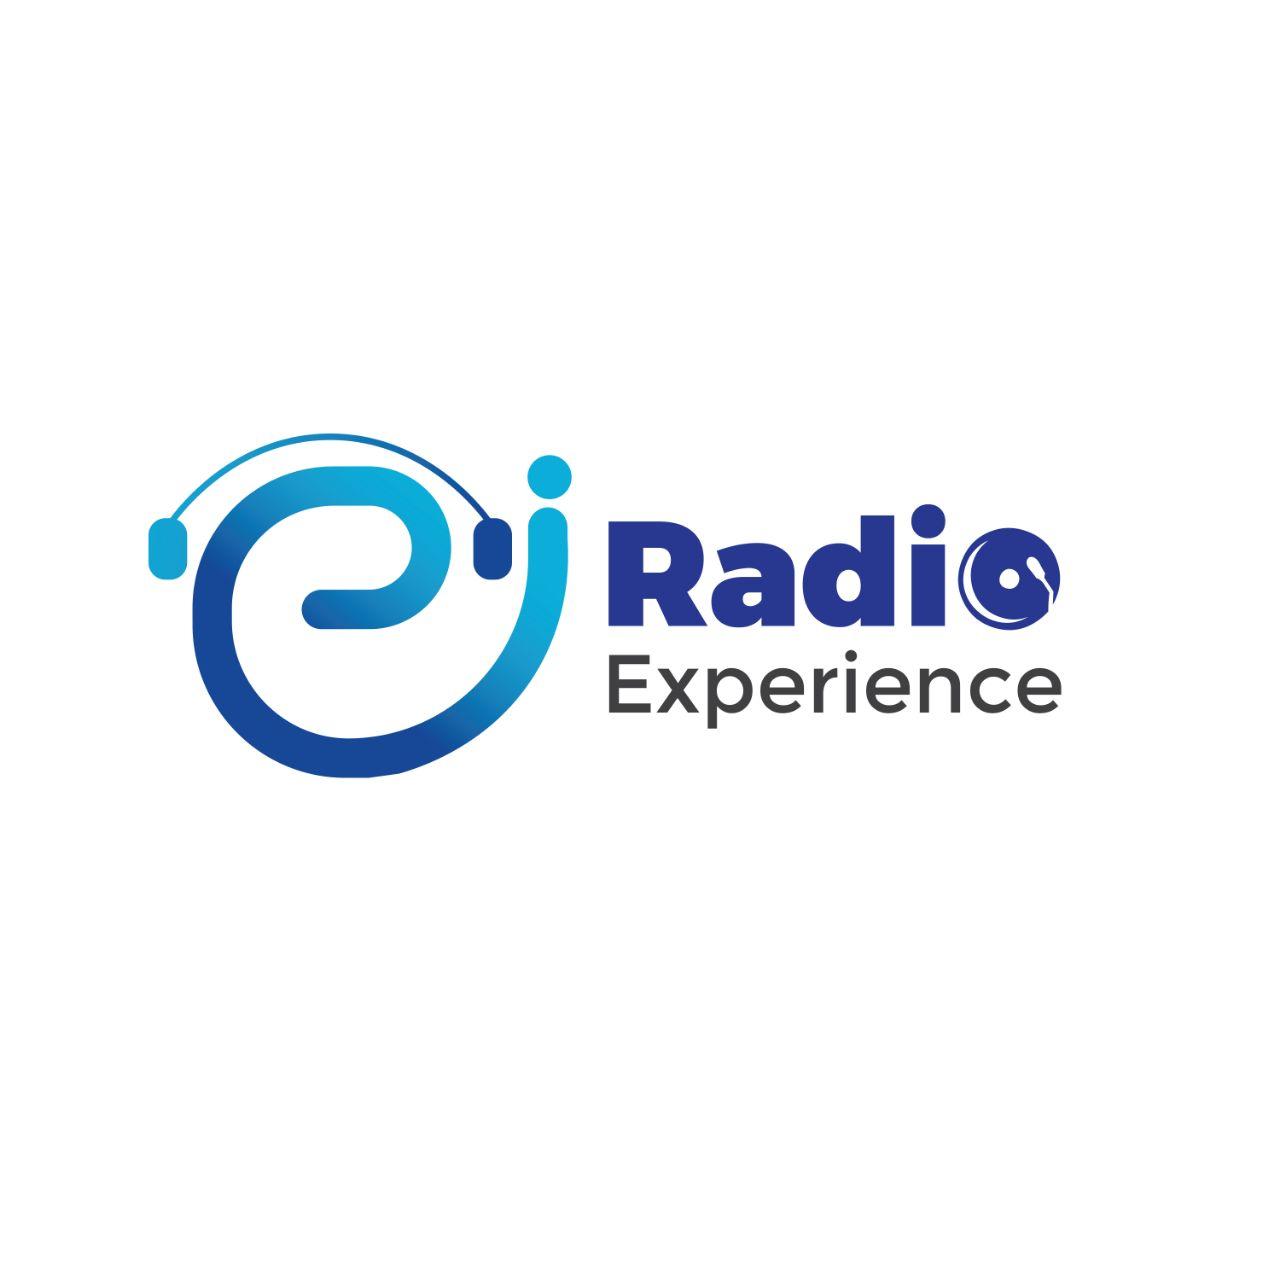  [PODCAST]Ei Radio Experience – New Year Show